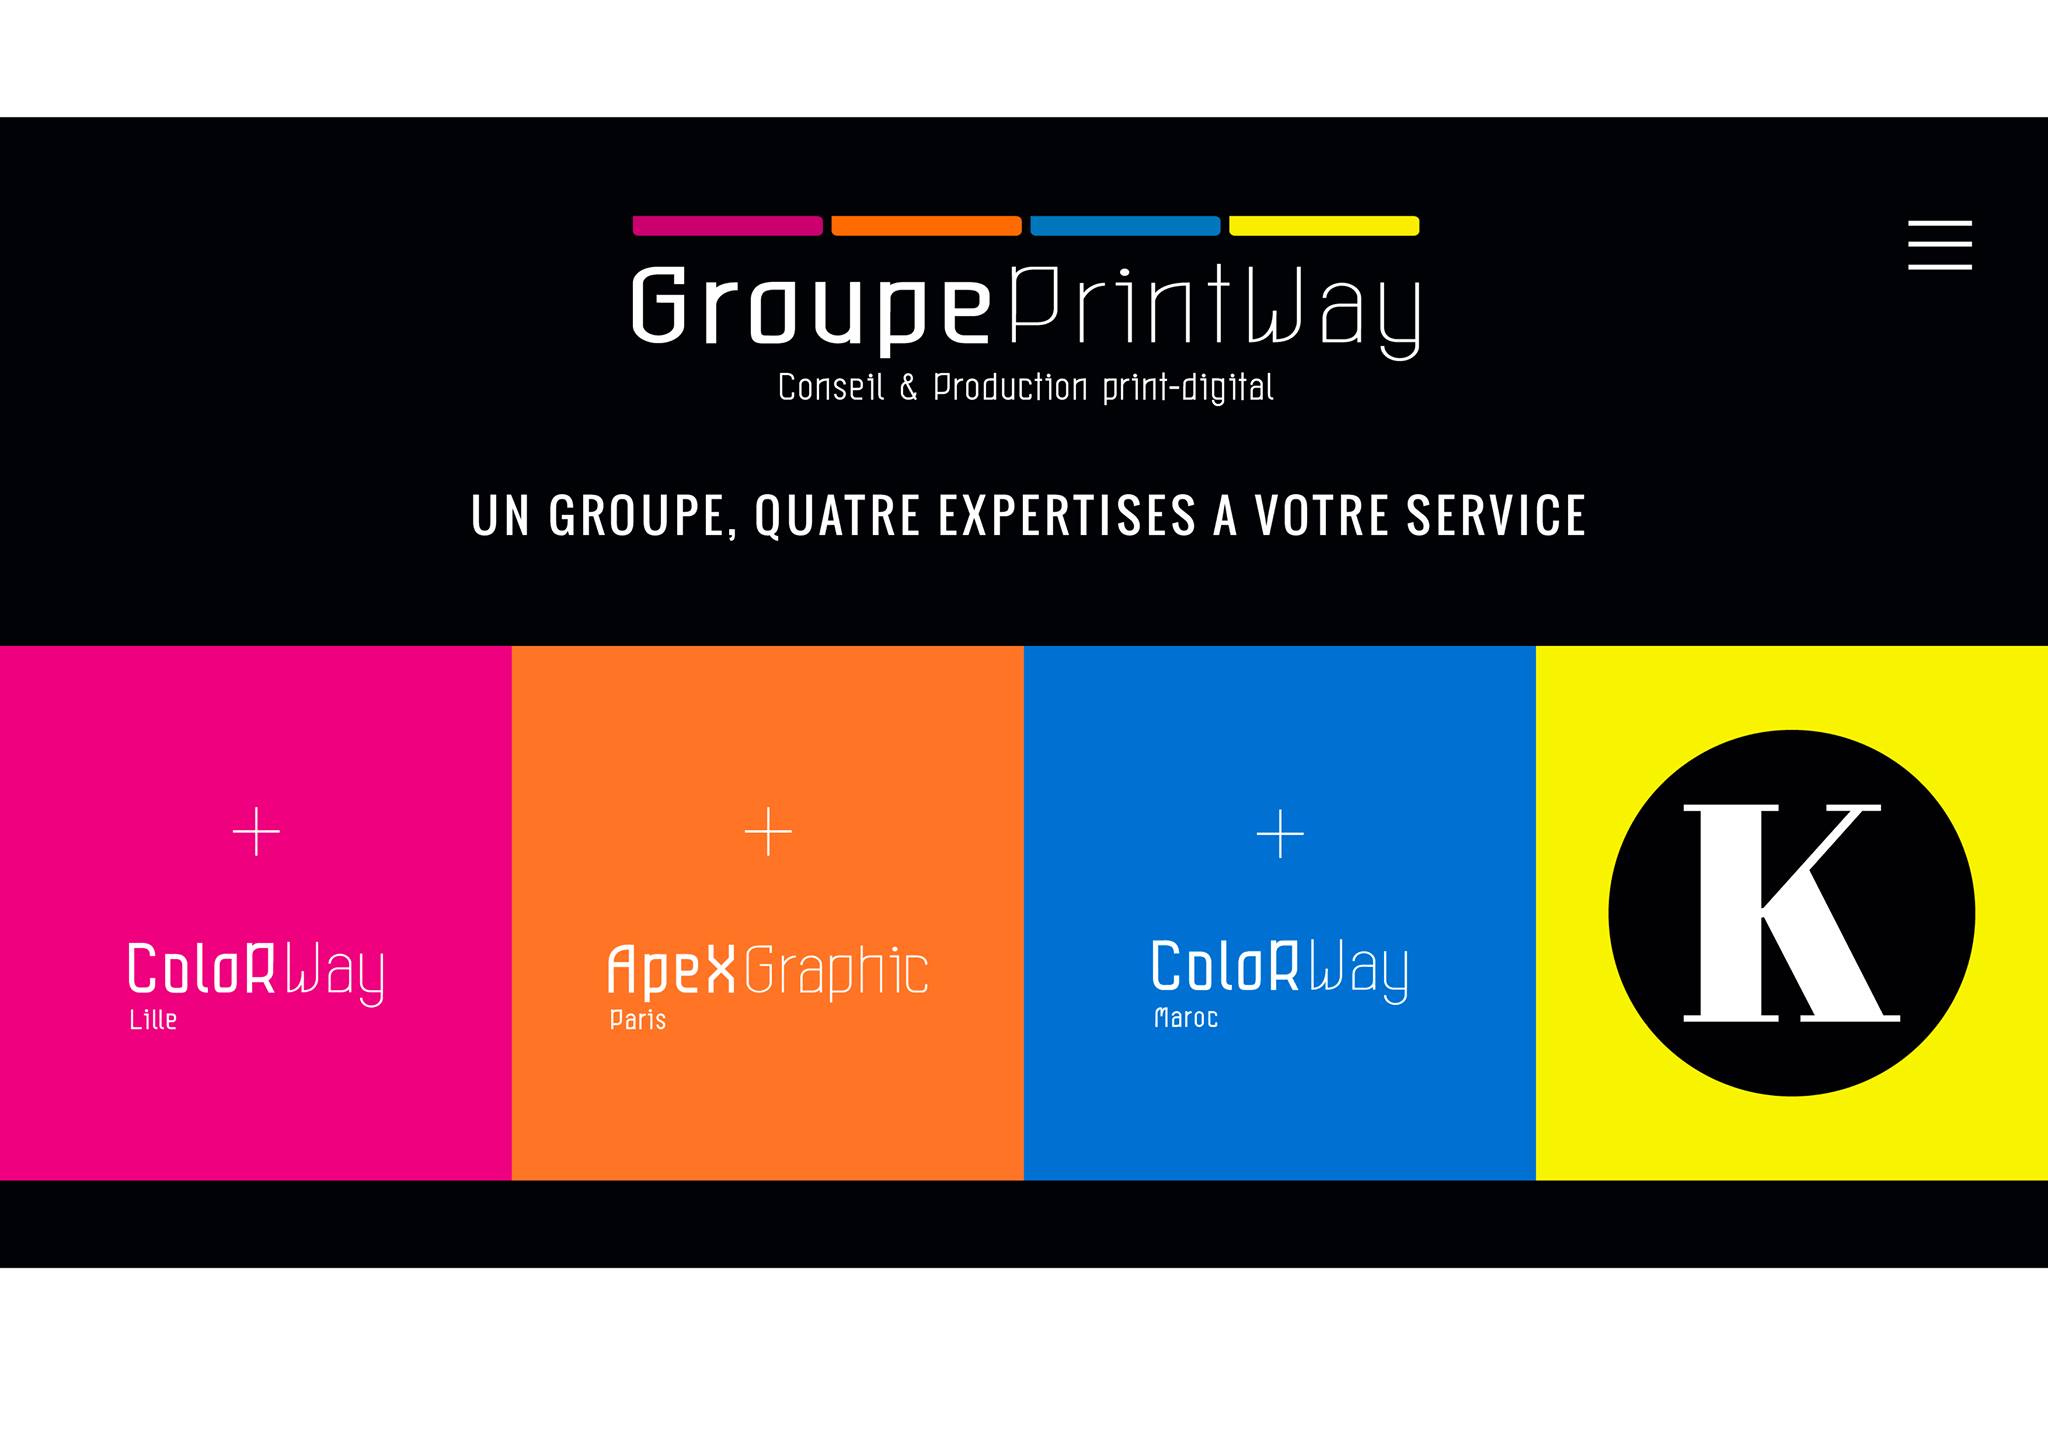 Groupe Printway